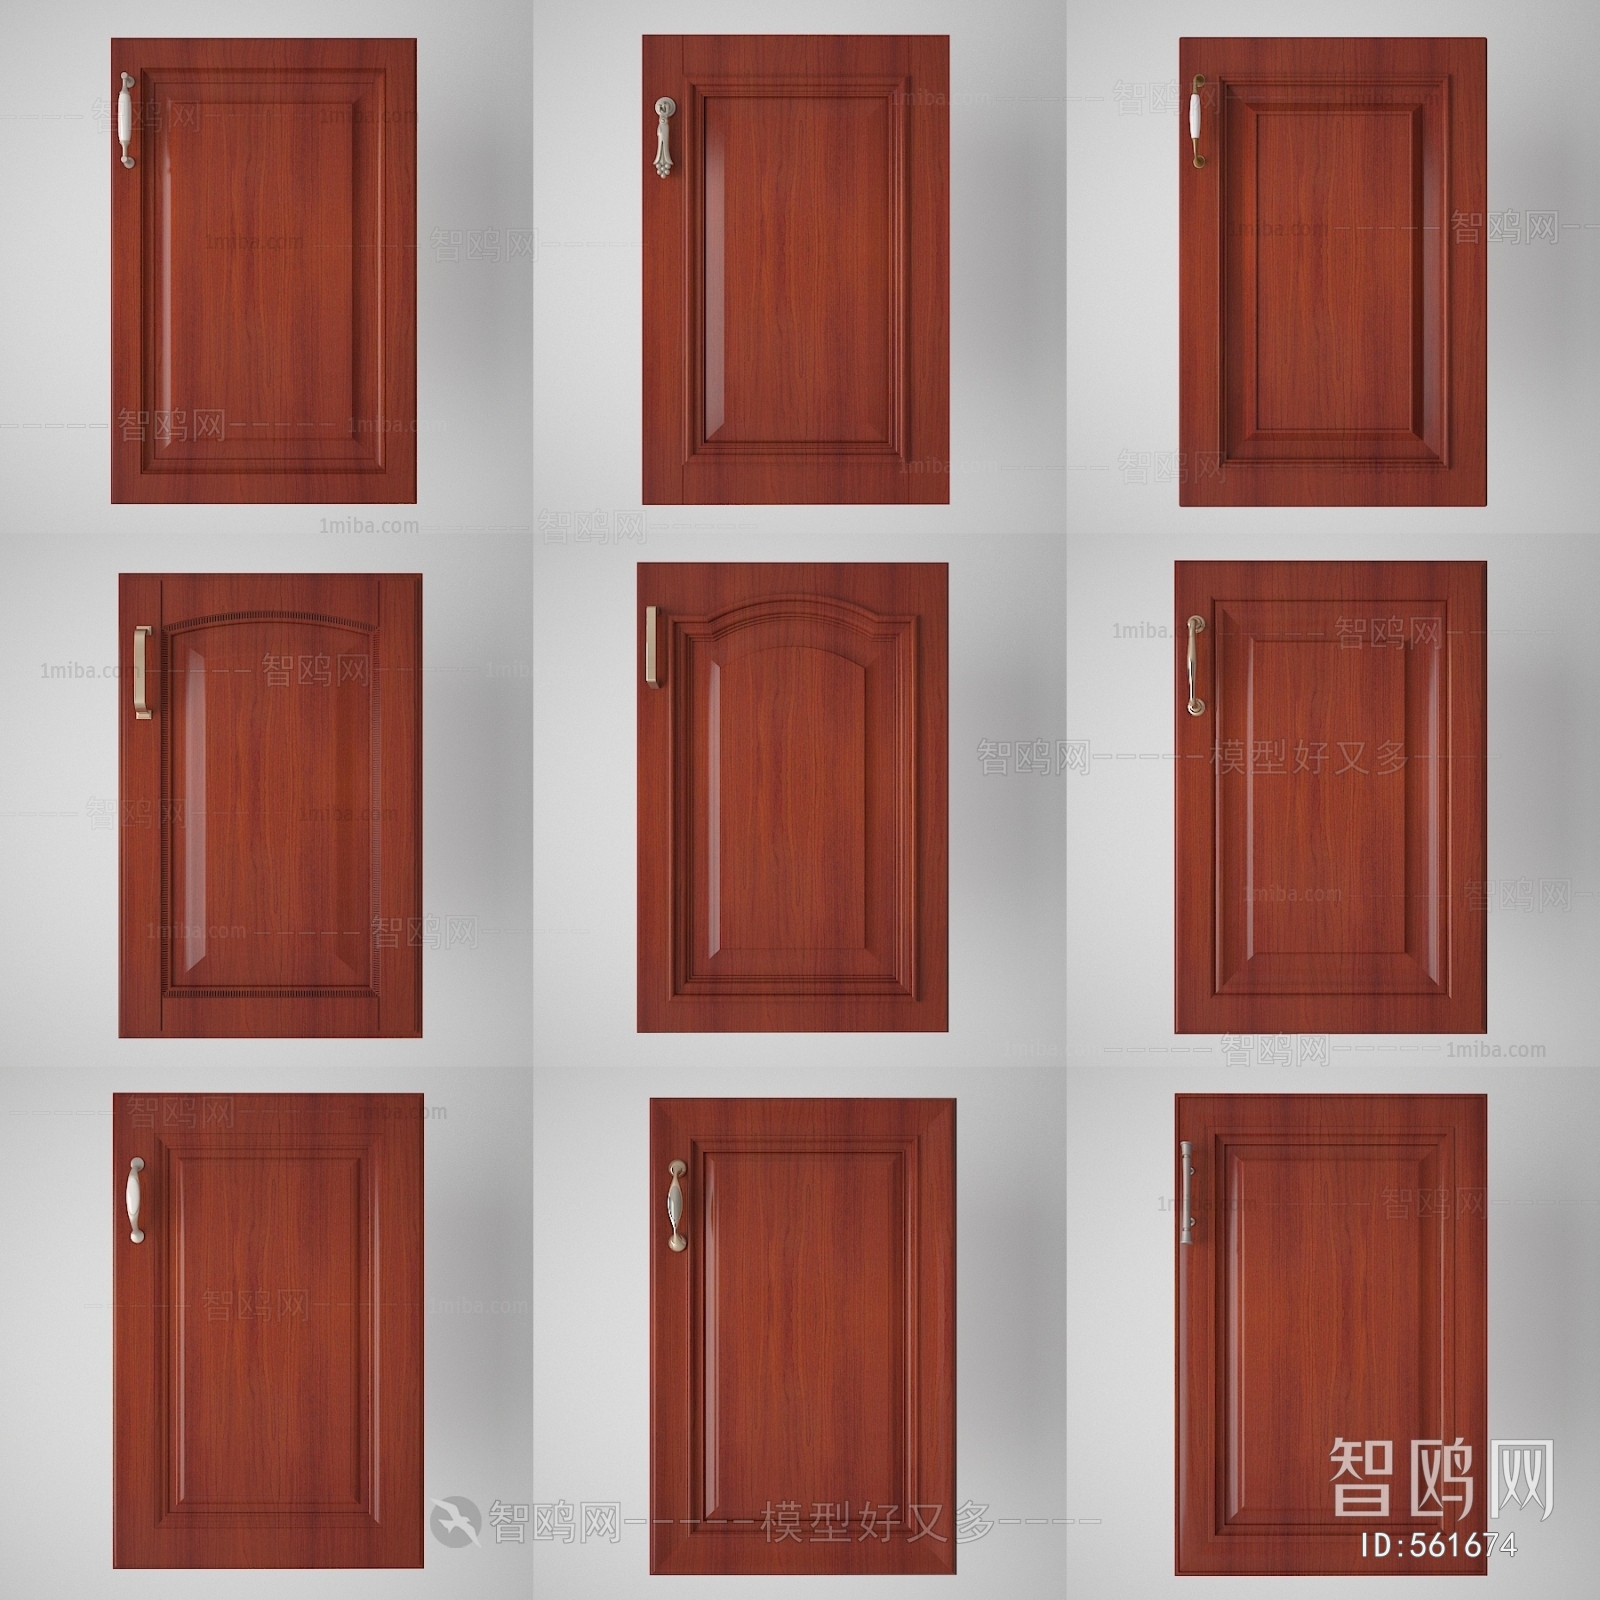 New Chinese Style Door Panel